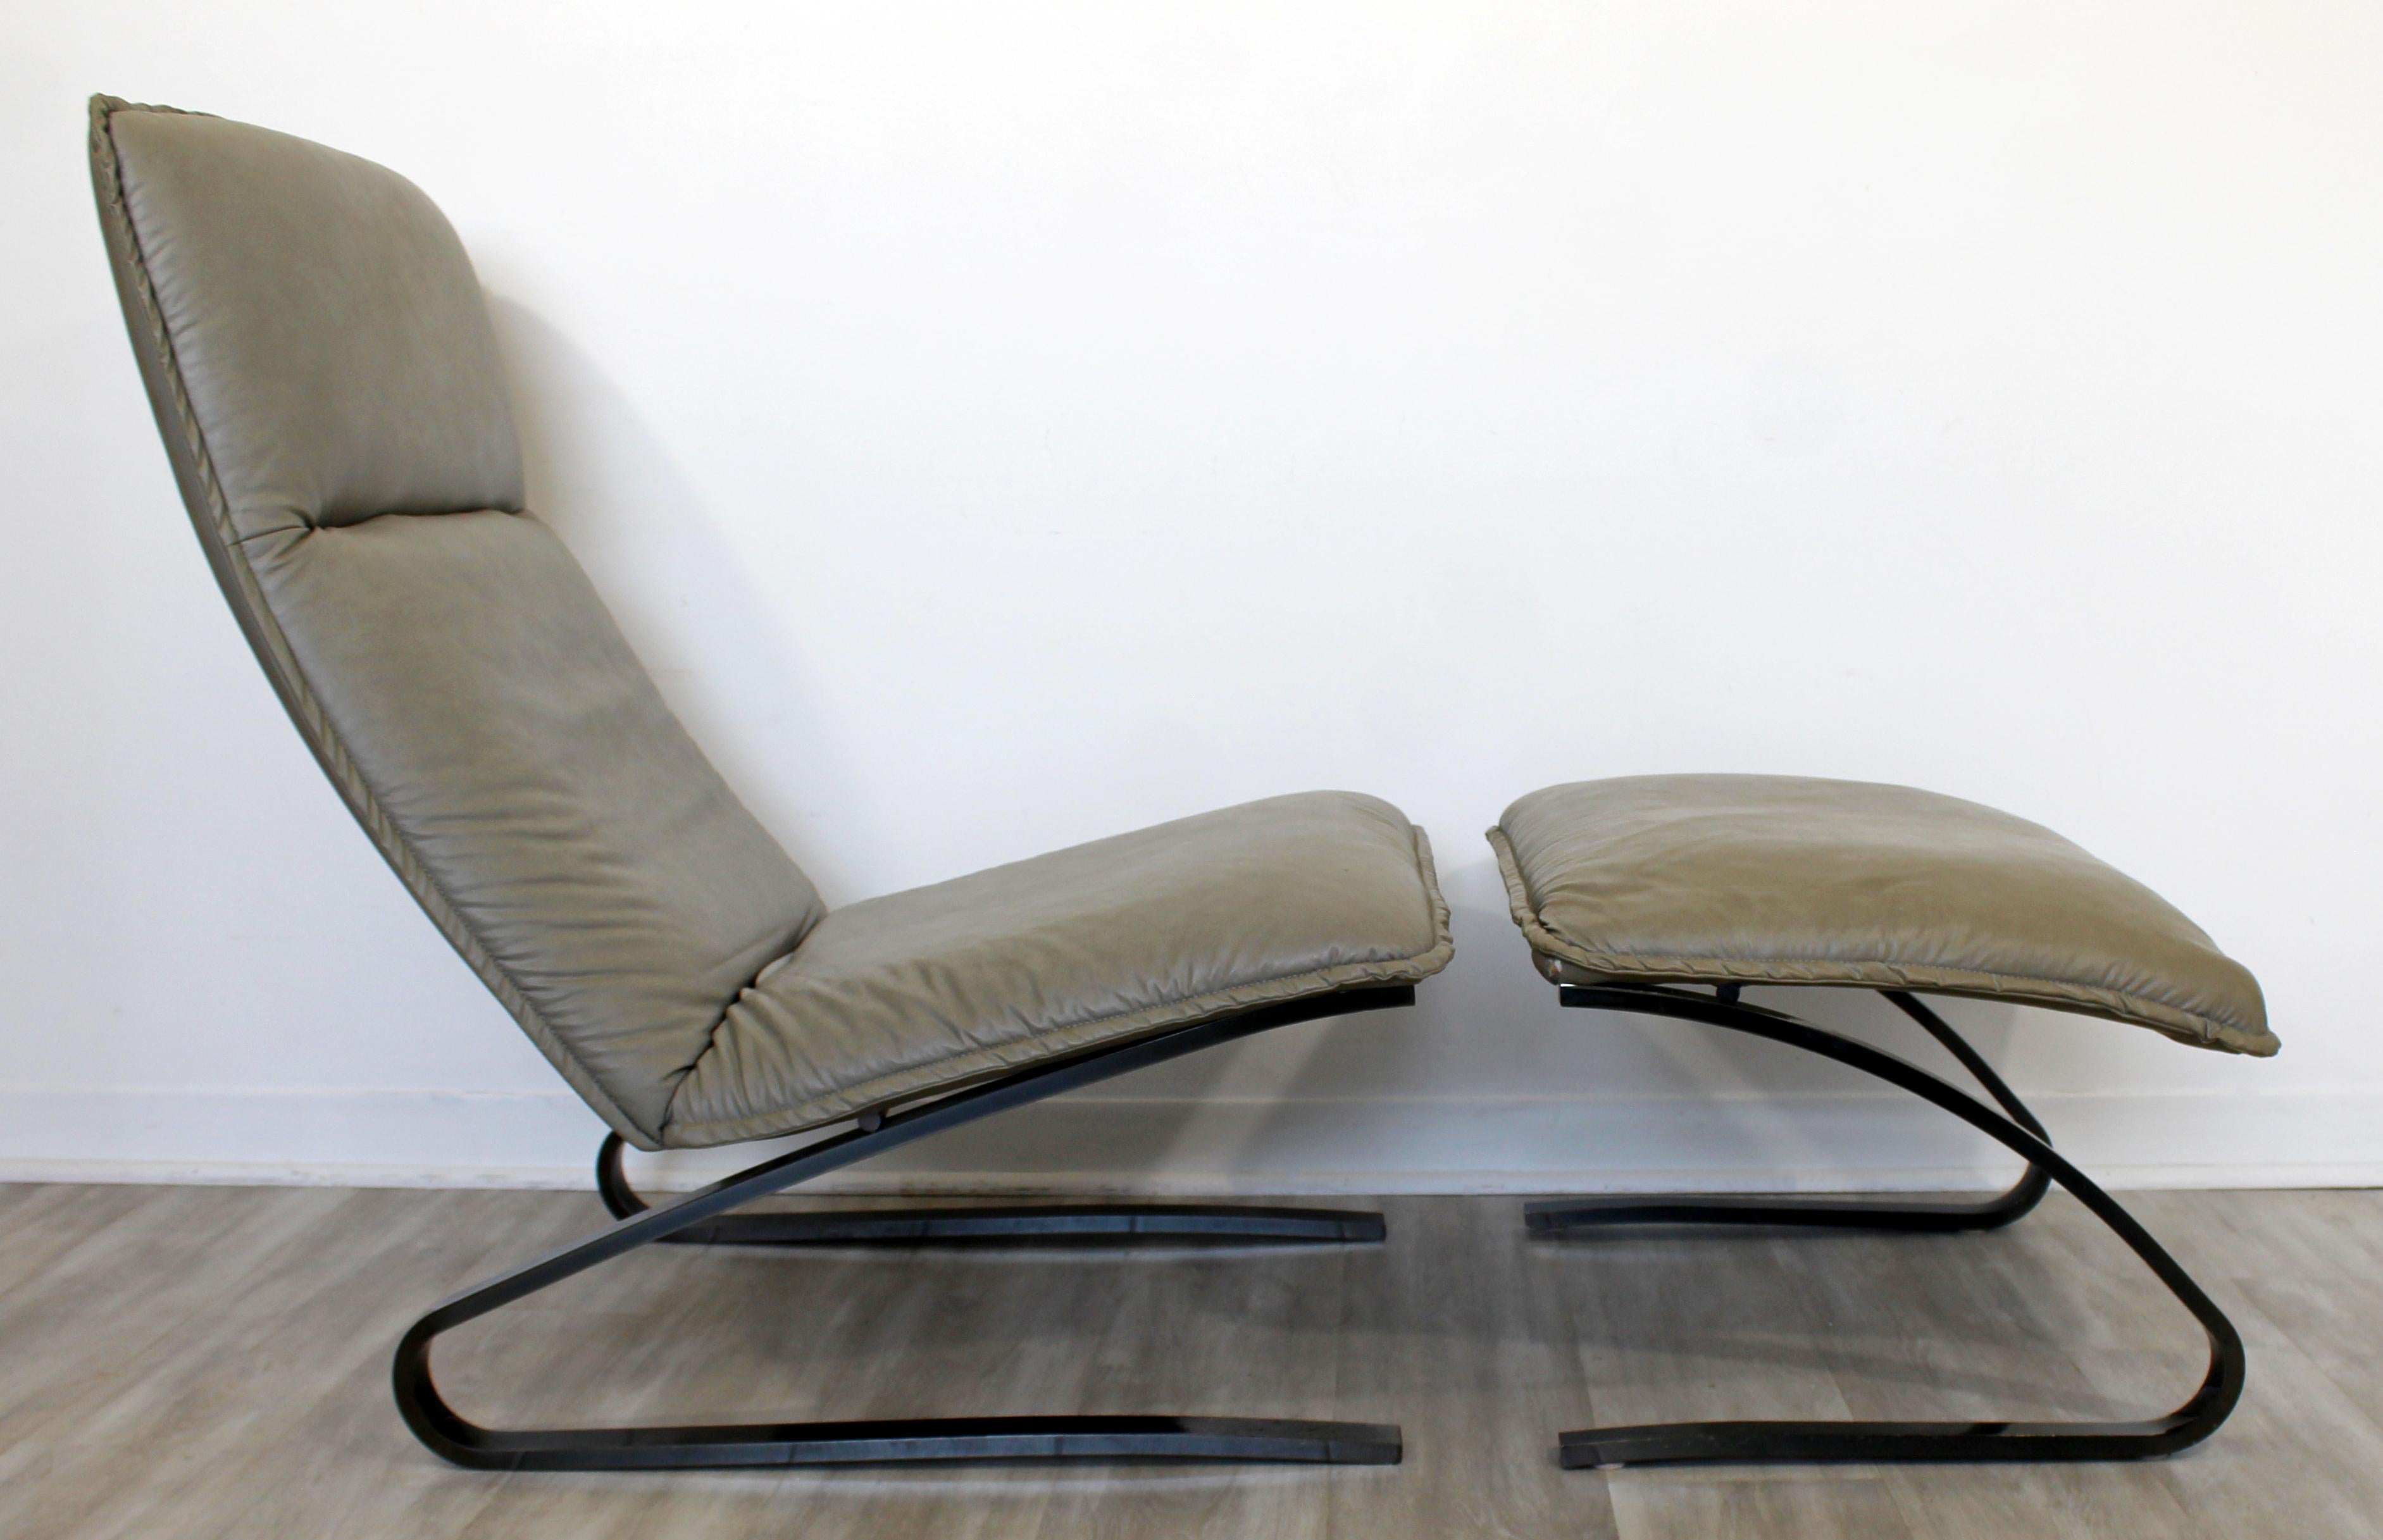 American Contemporary Modern Sculptural DIA Gunmetal Leather Lounge Chair & Ottoman 1990s